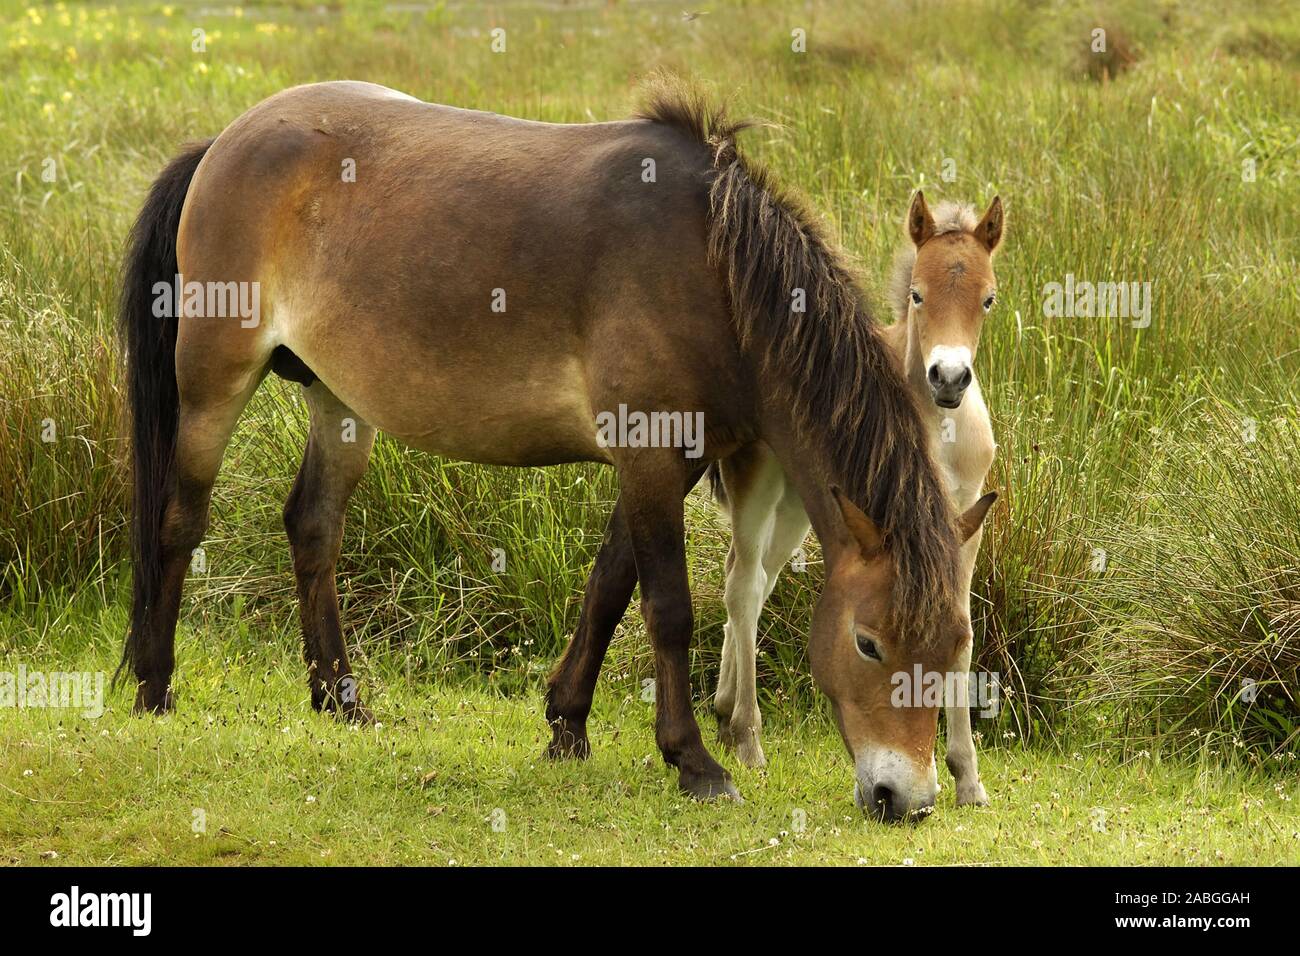 Haustiere - Pets - Pferde Animals - mammals - Horses Stock Photo